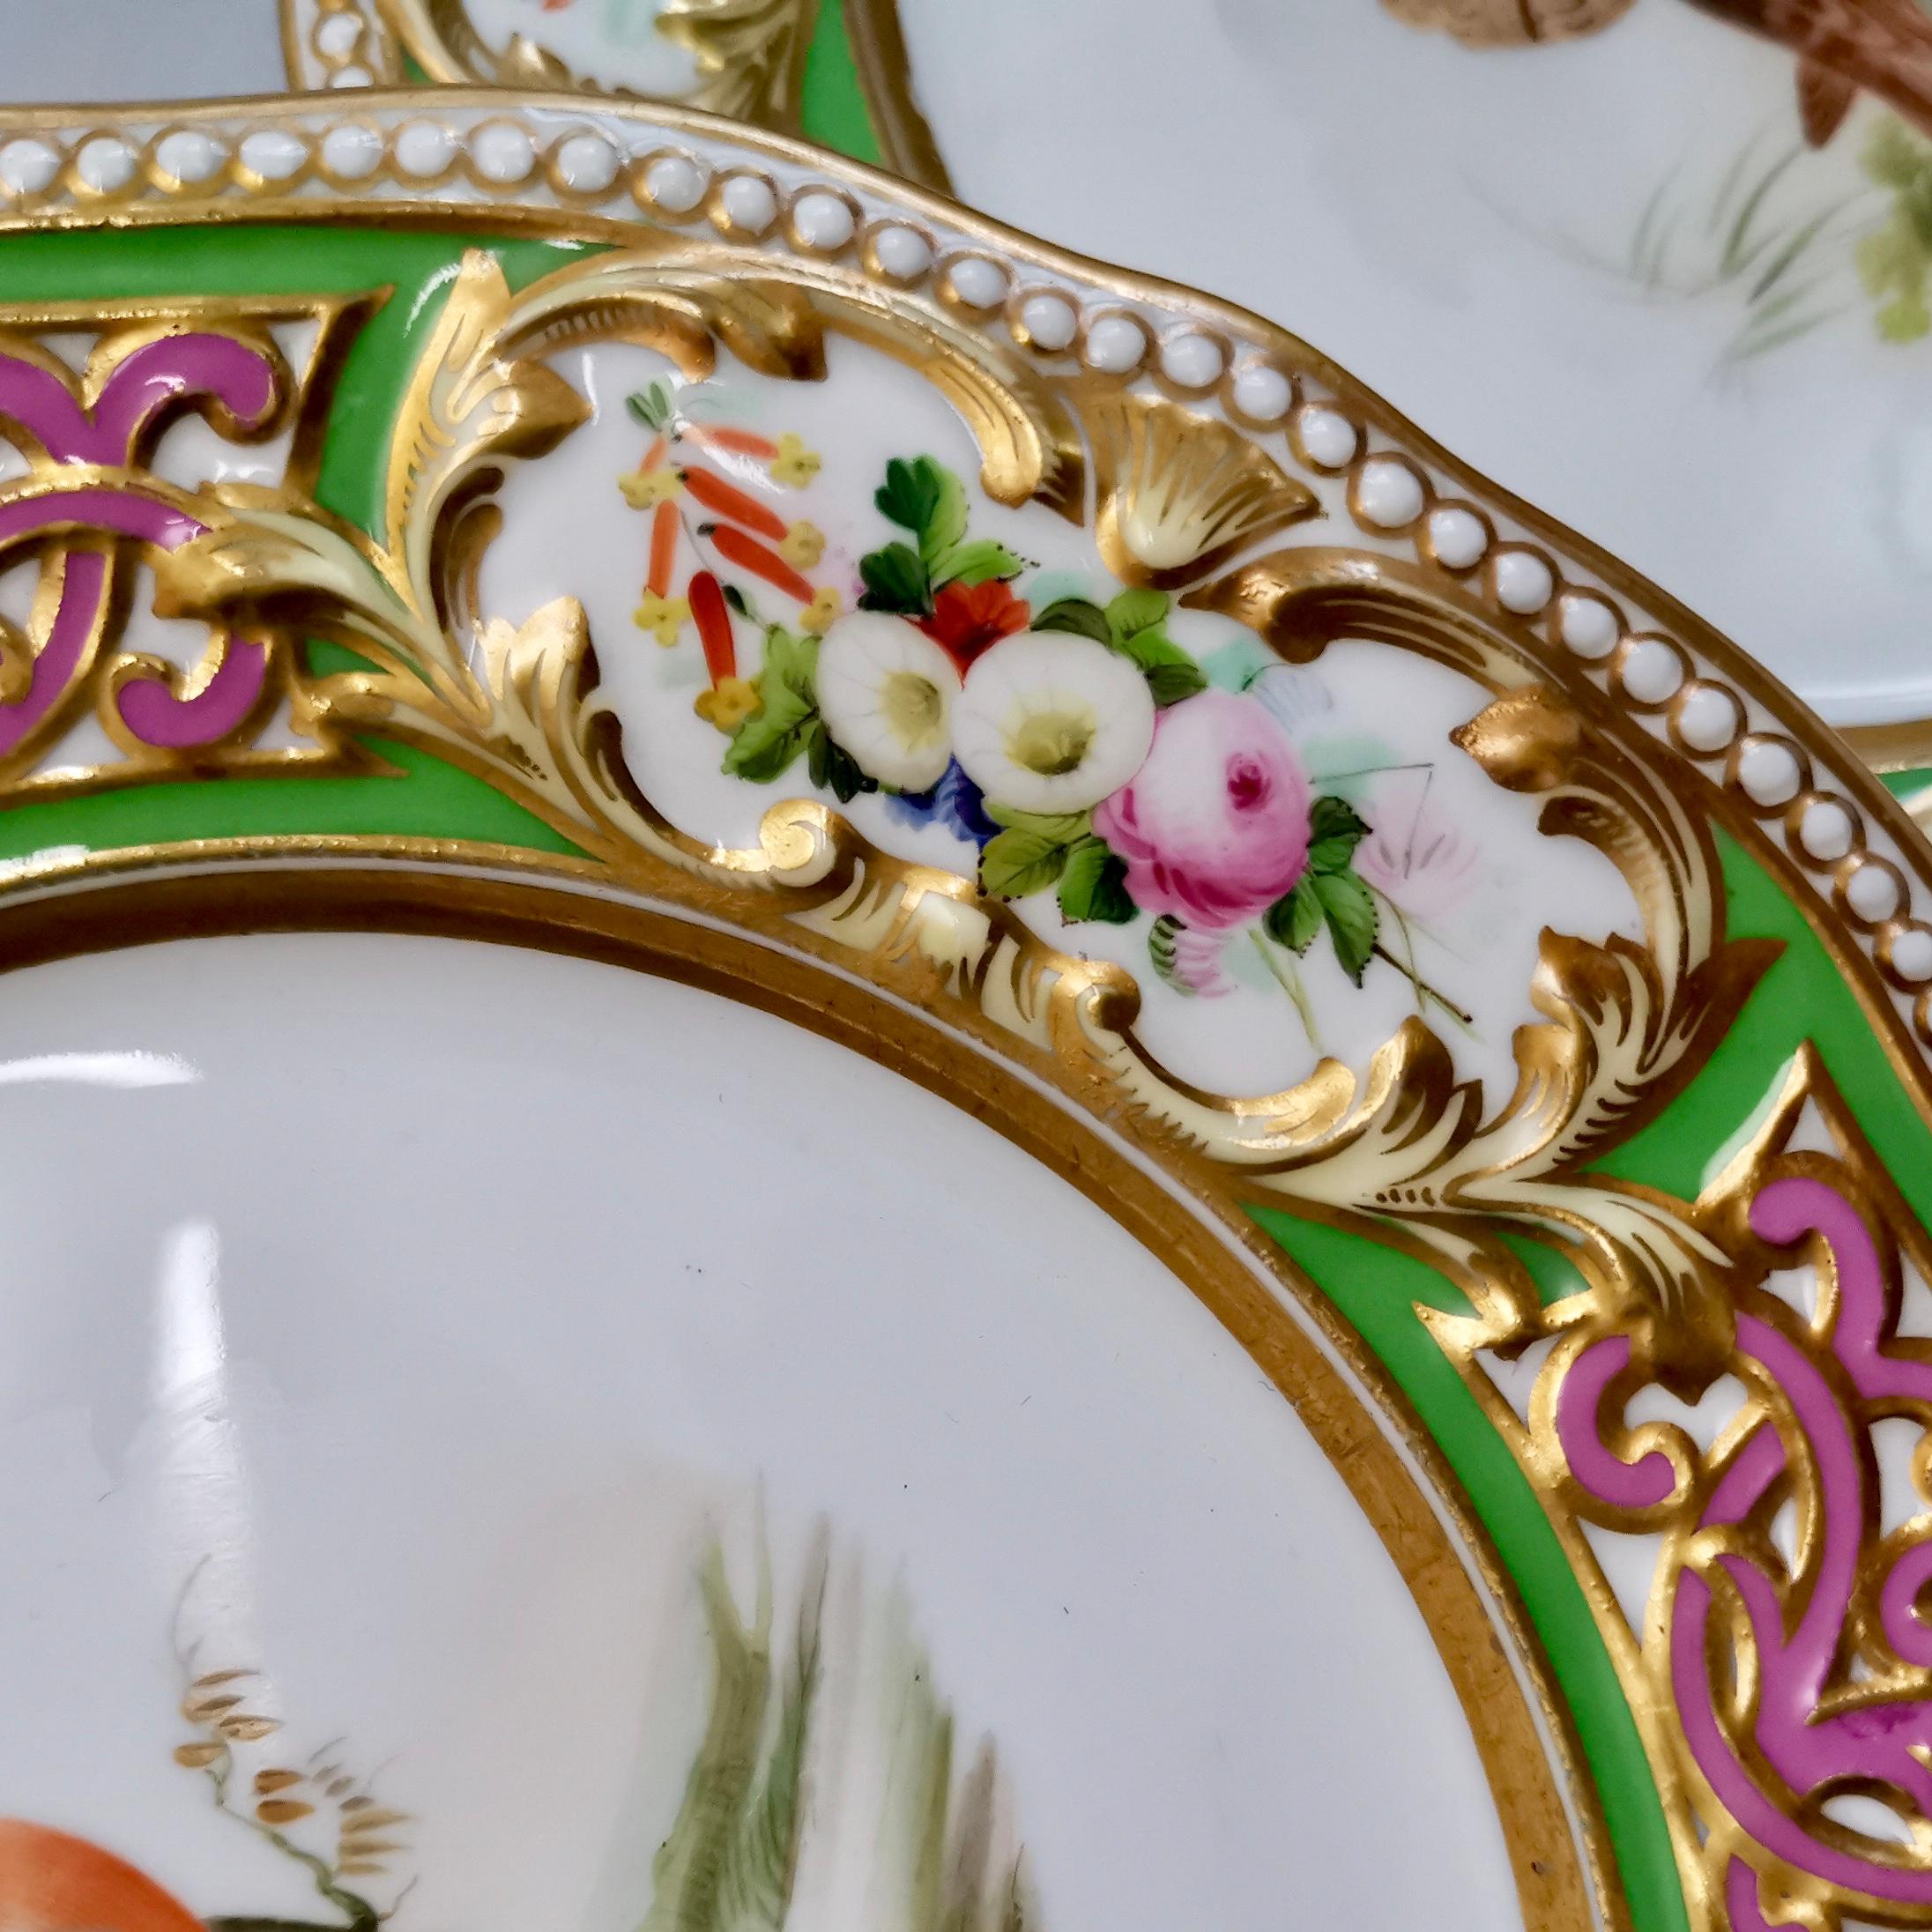 Grainger Worcester Porcelain Dessert Service, Persian Revival with Birds, 1855 10